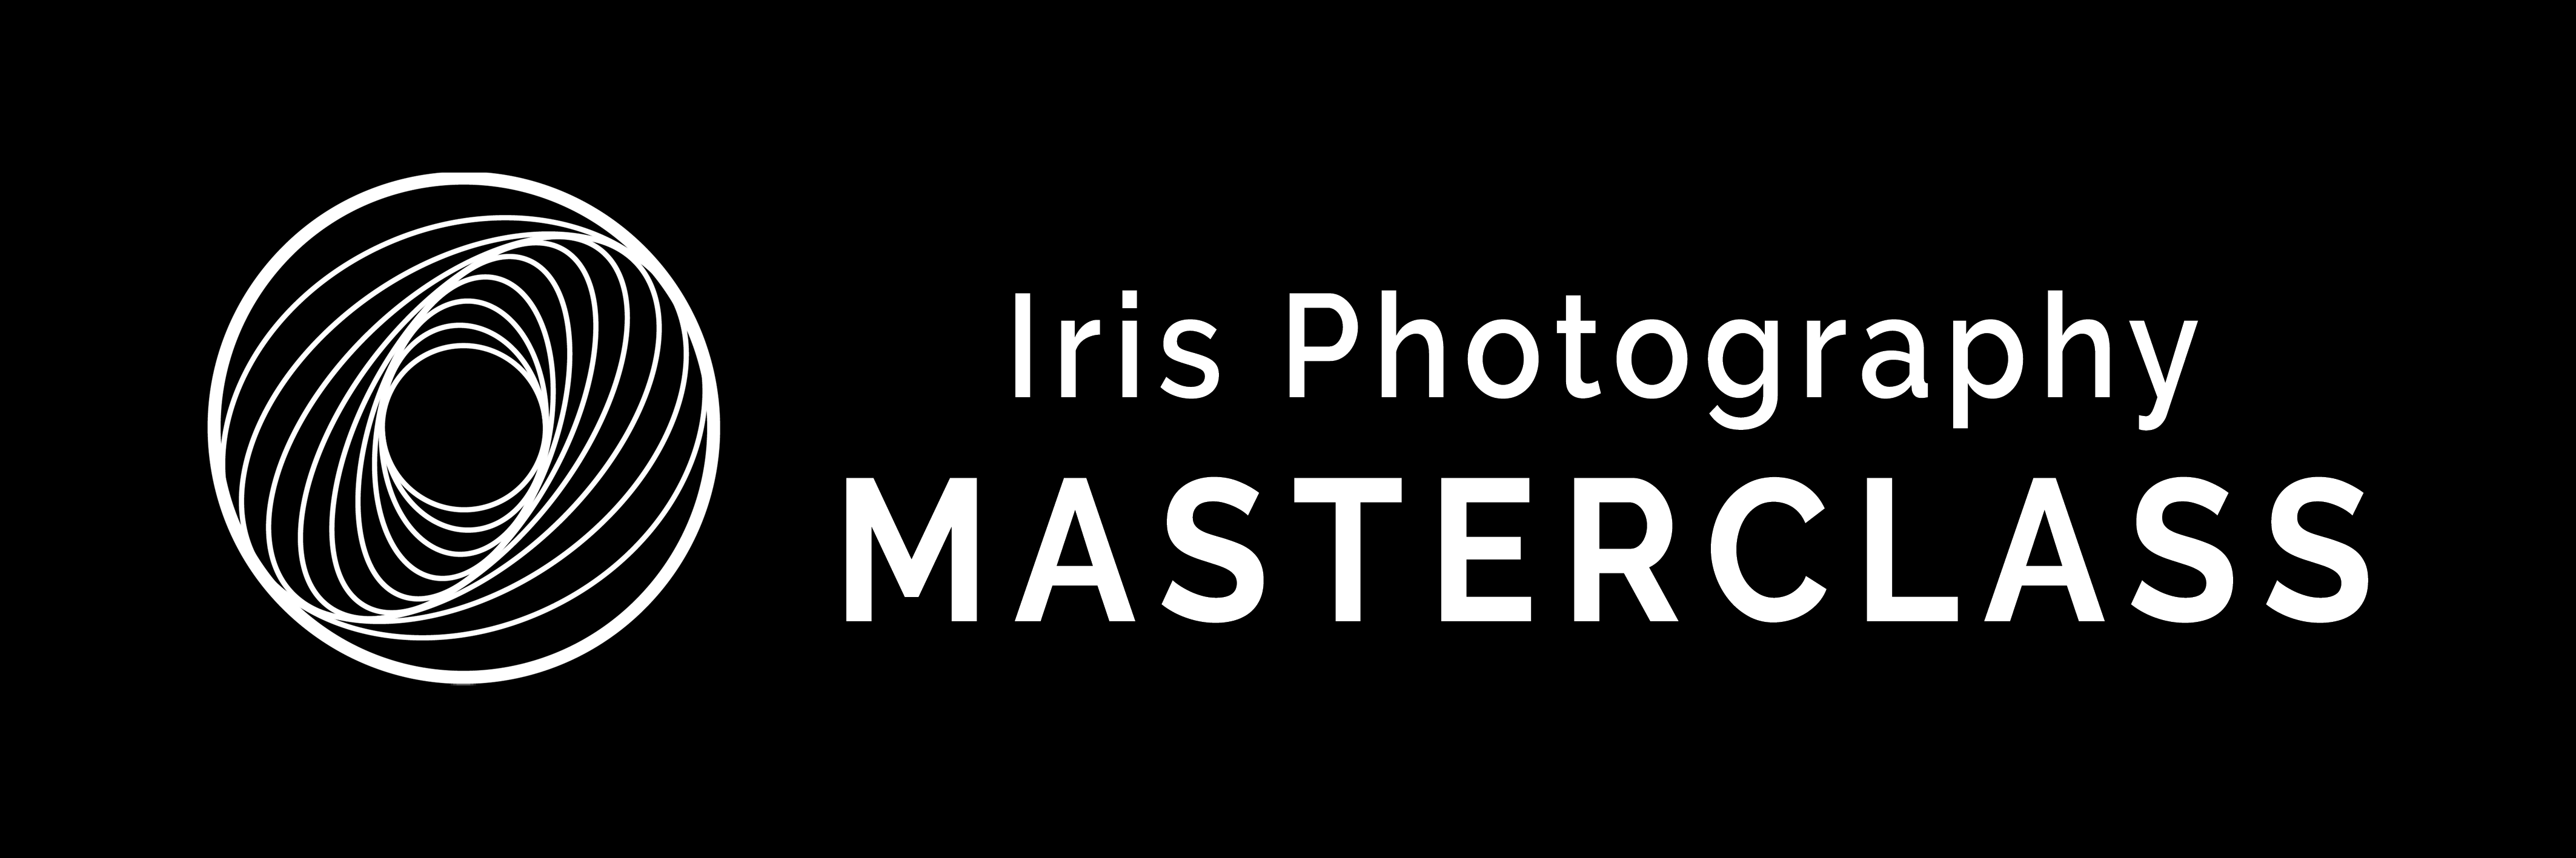 Iris photography masterclass